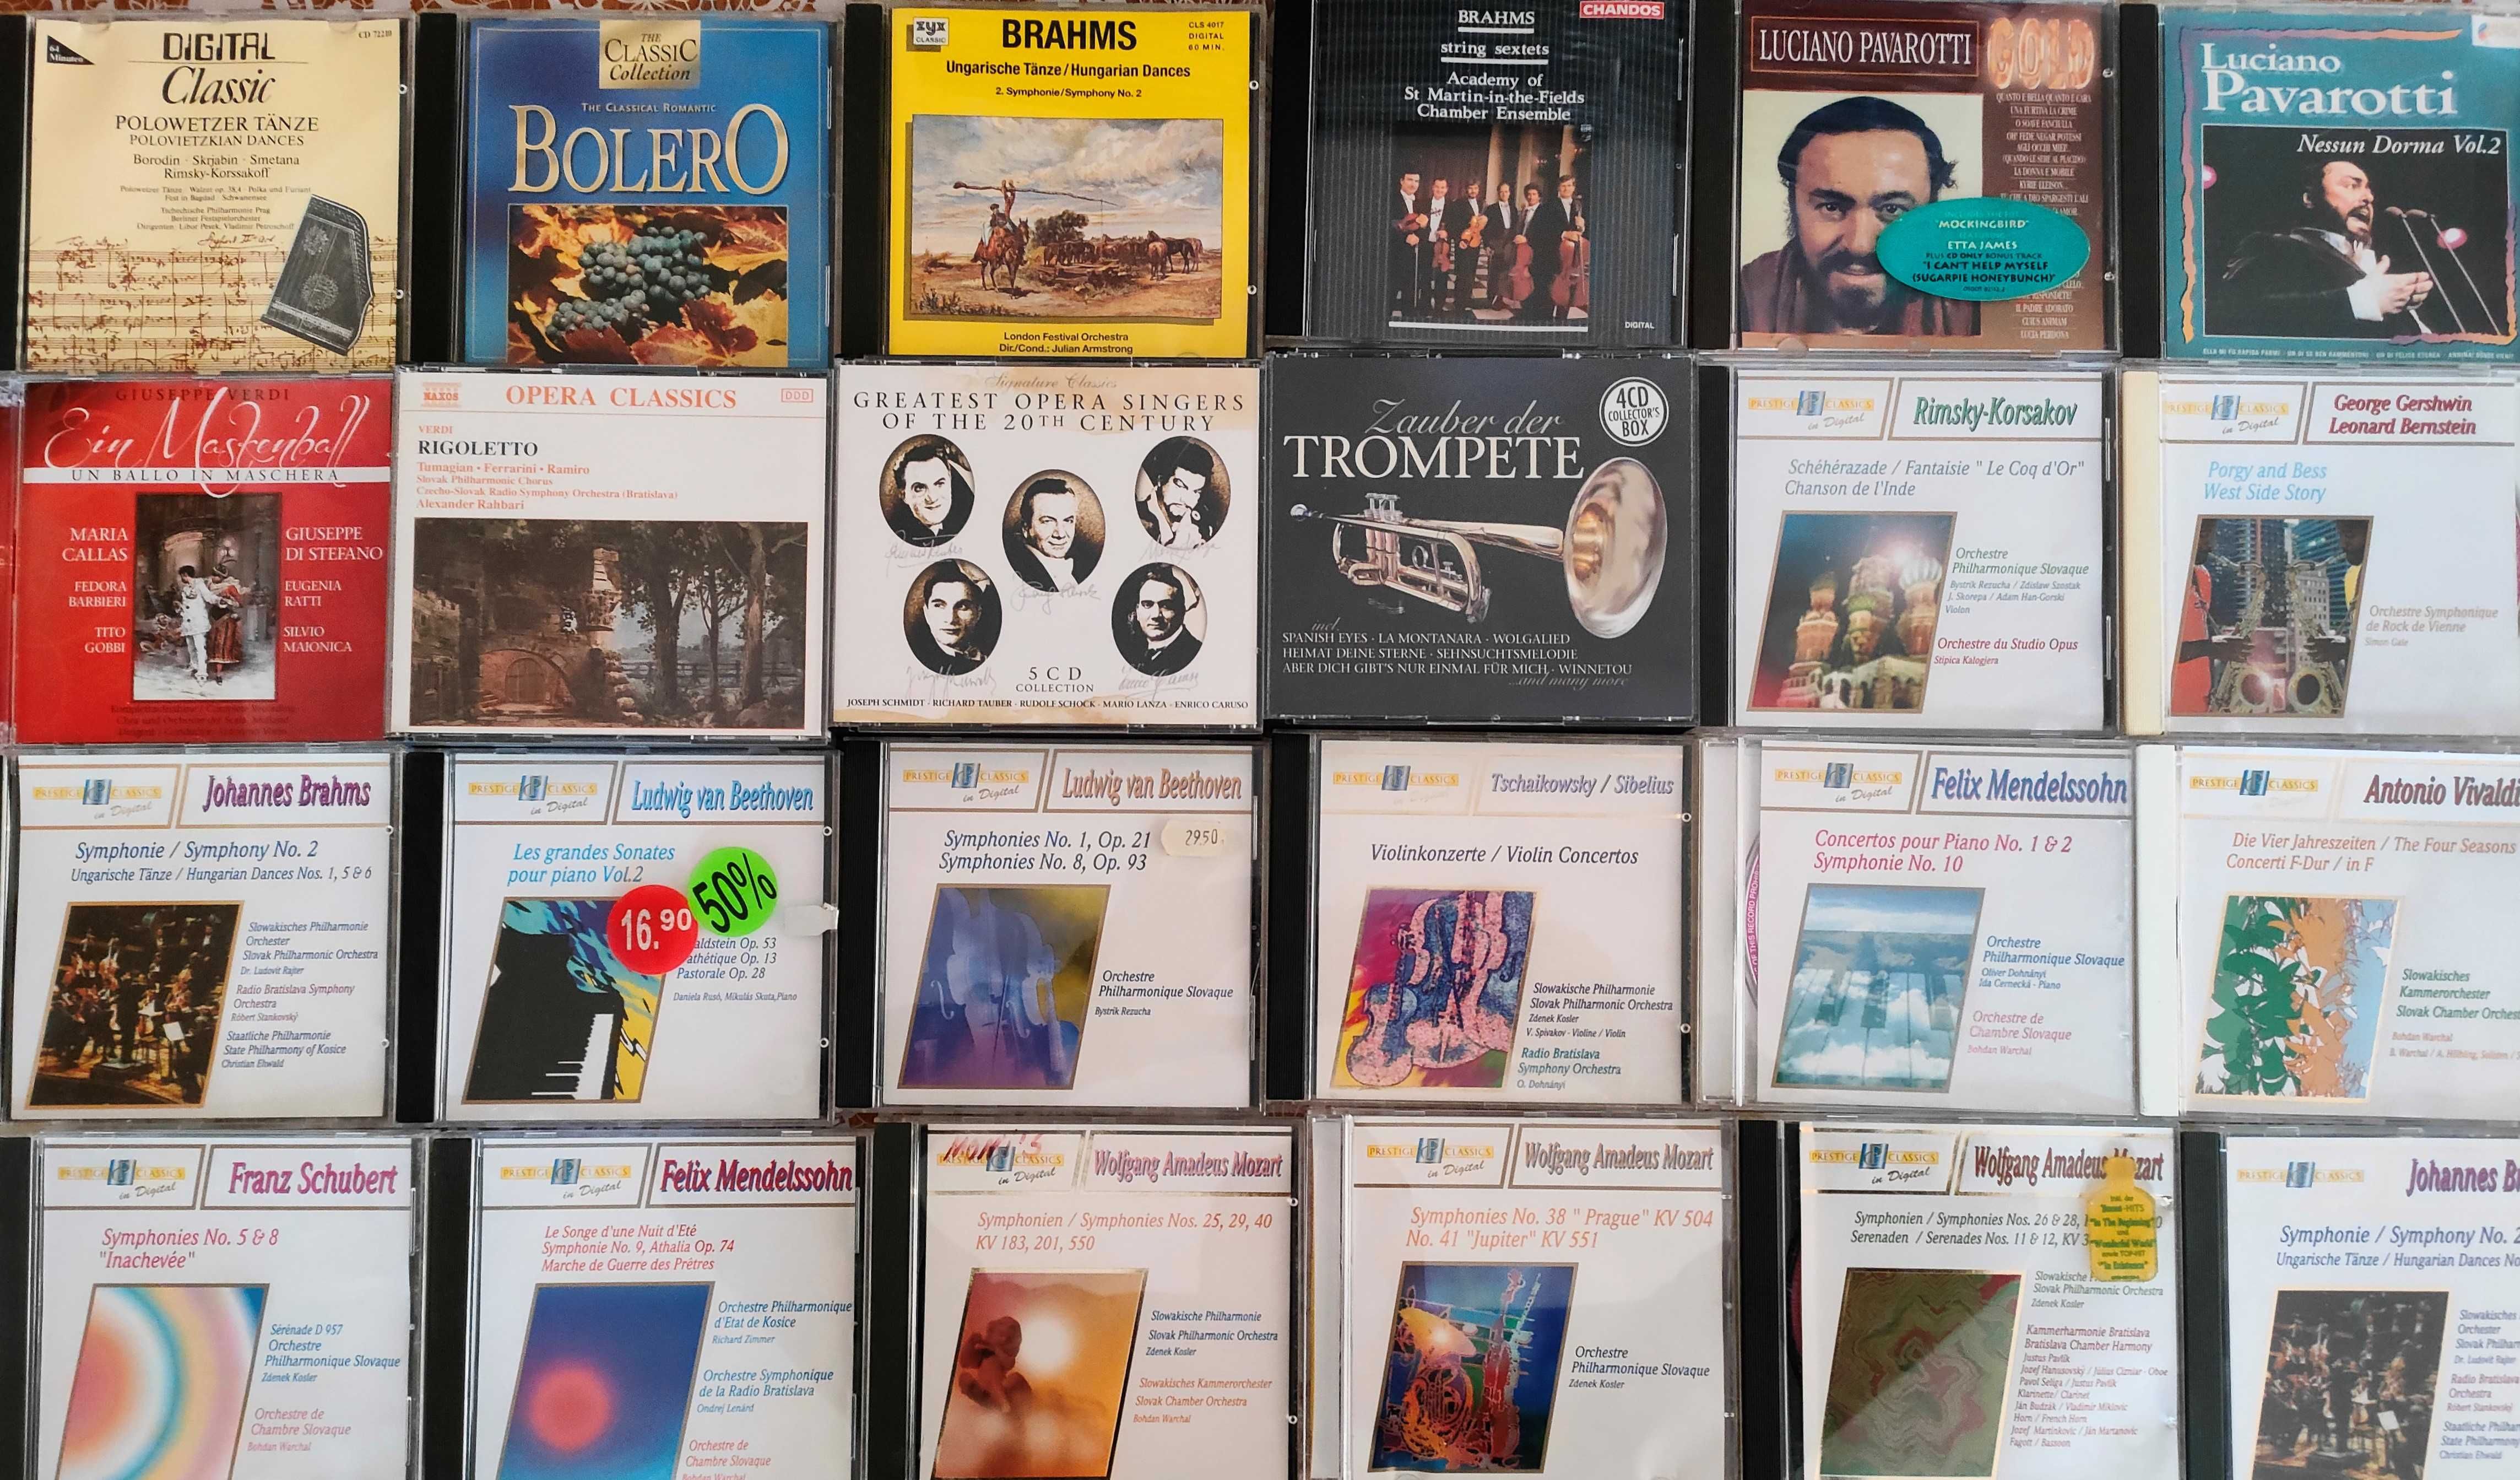 CD/Clasica - Beethoven, Brahms, Chopin, Mozart, Vivaldi - Lista